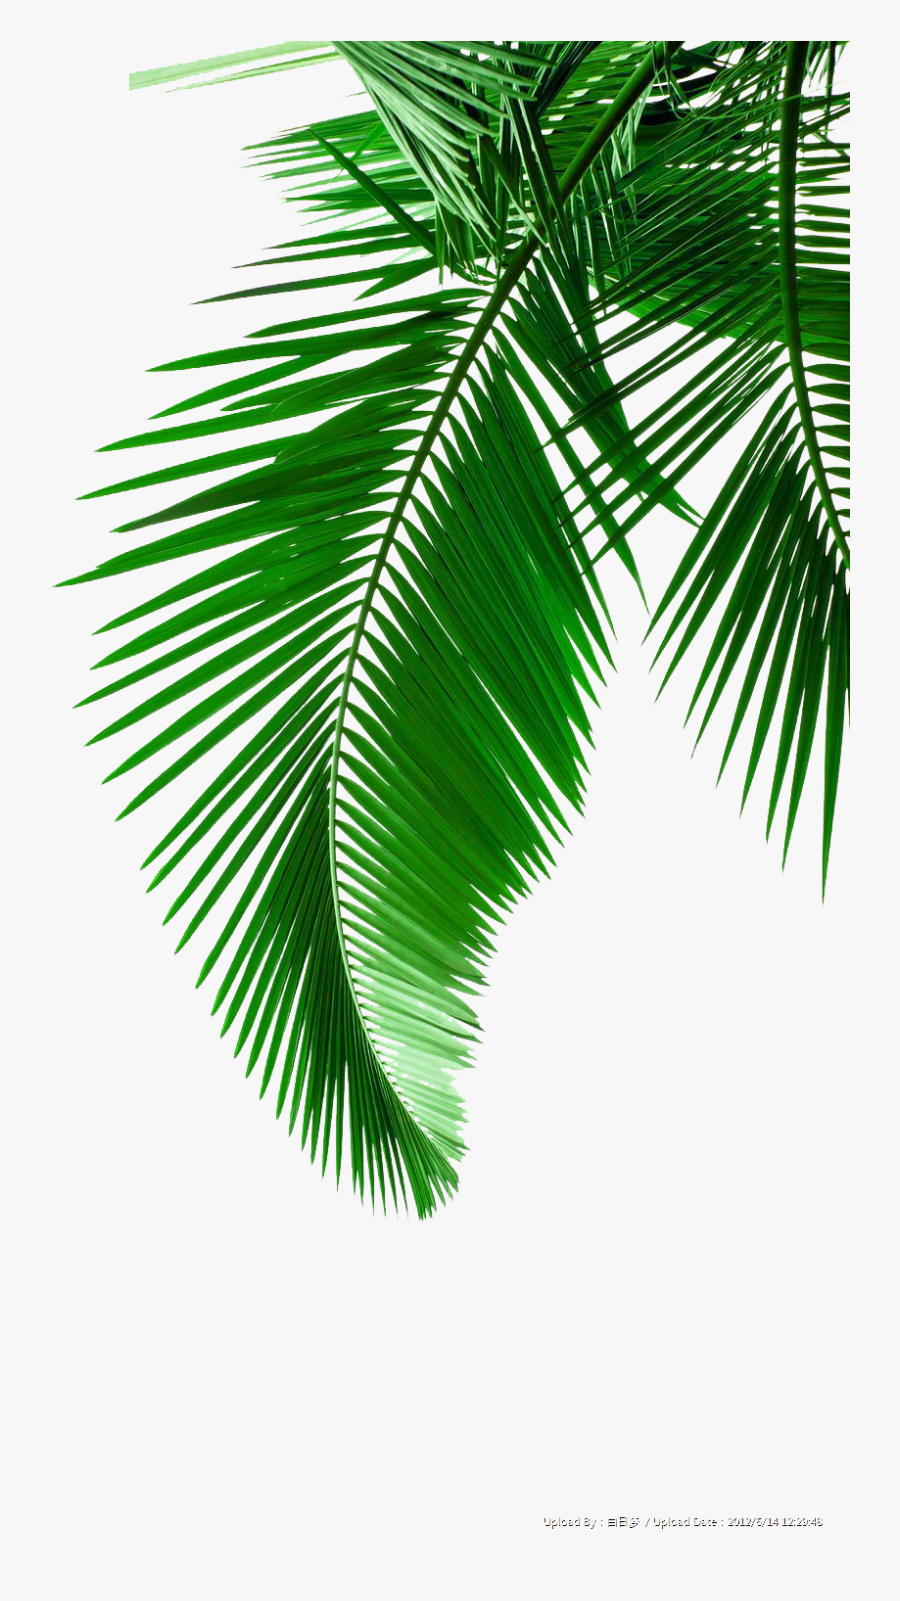 Picture Leaf Leaves Material Arecaceae Palm Green Clipart - Palm Leaves Clip Art, Transparent Clipart